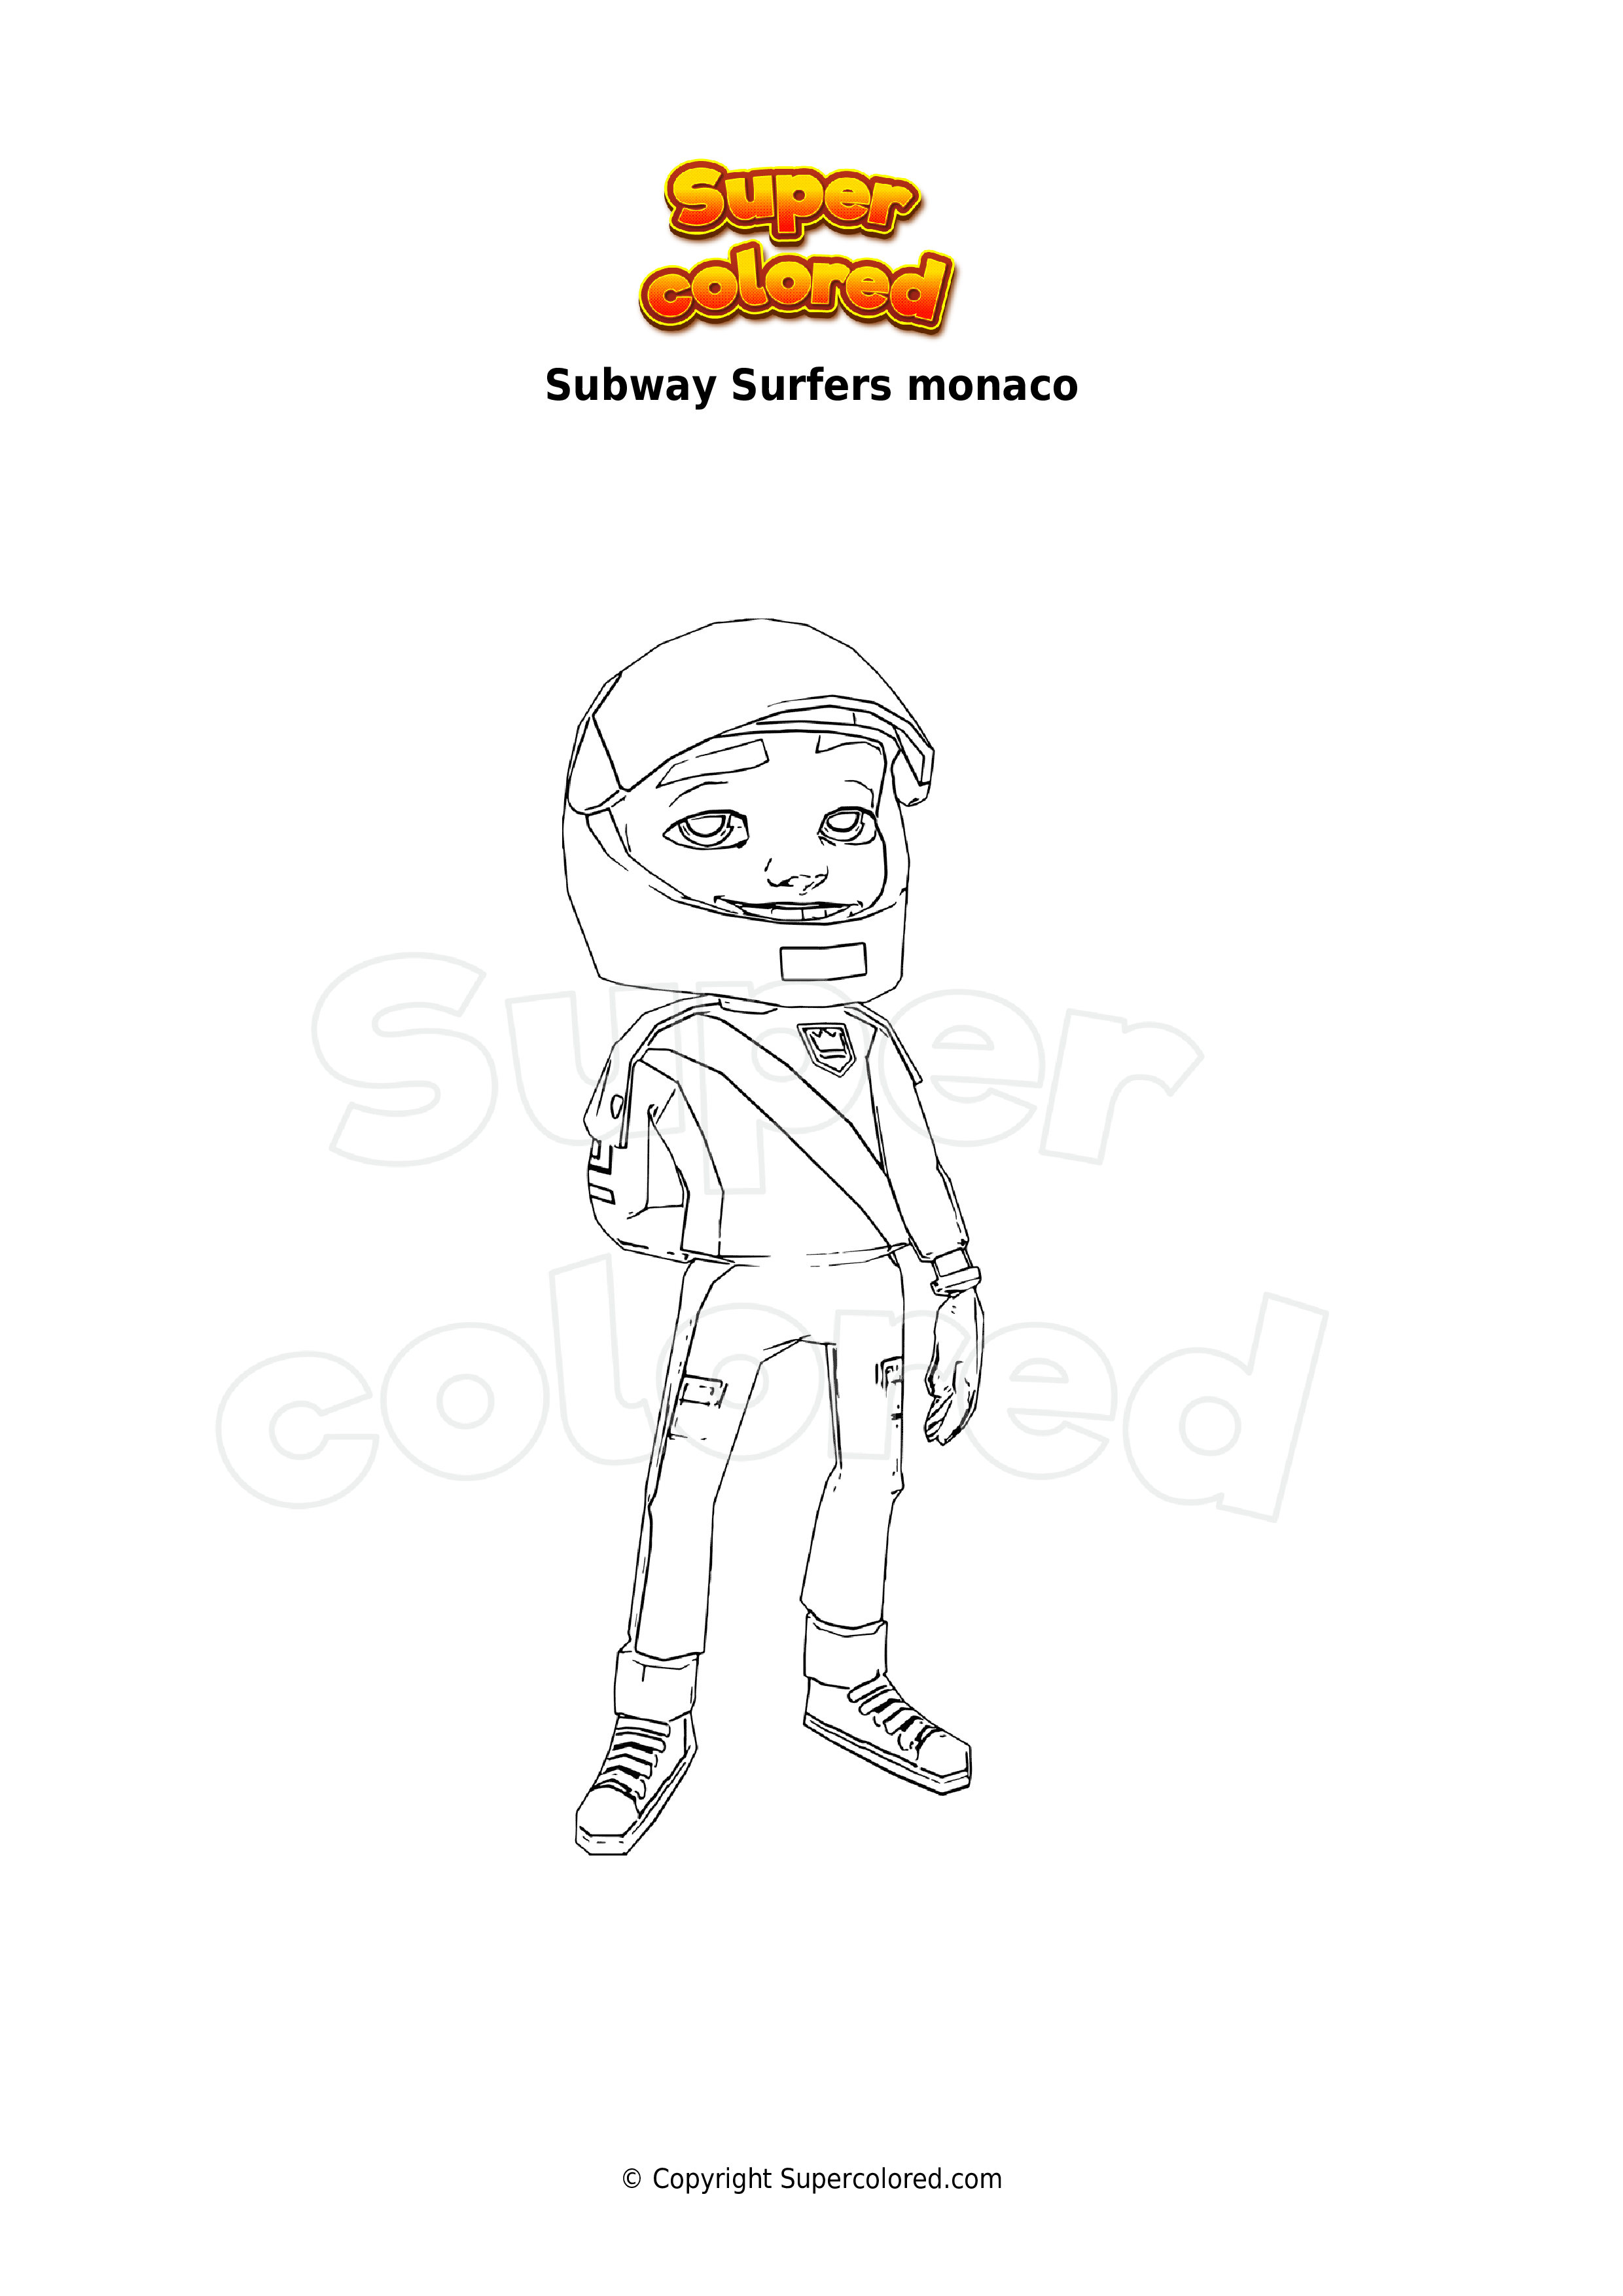 Subway surfers monaco